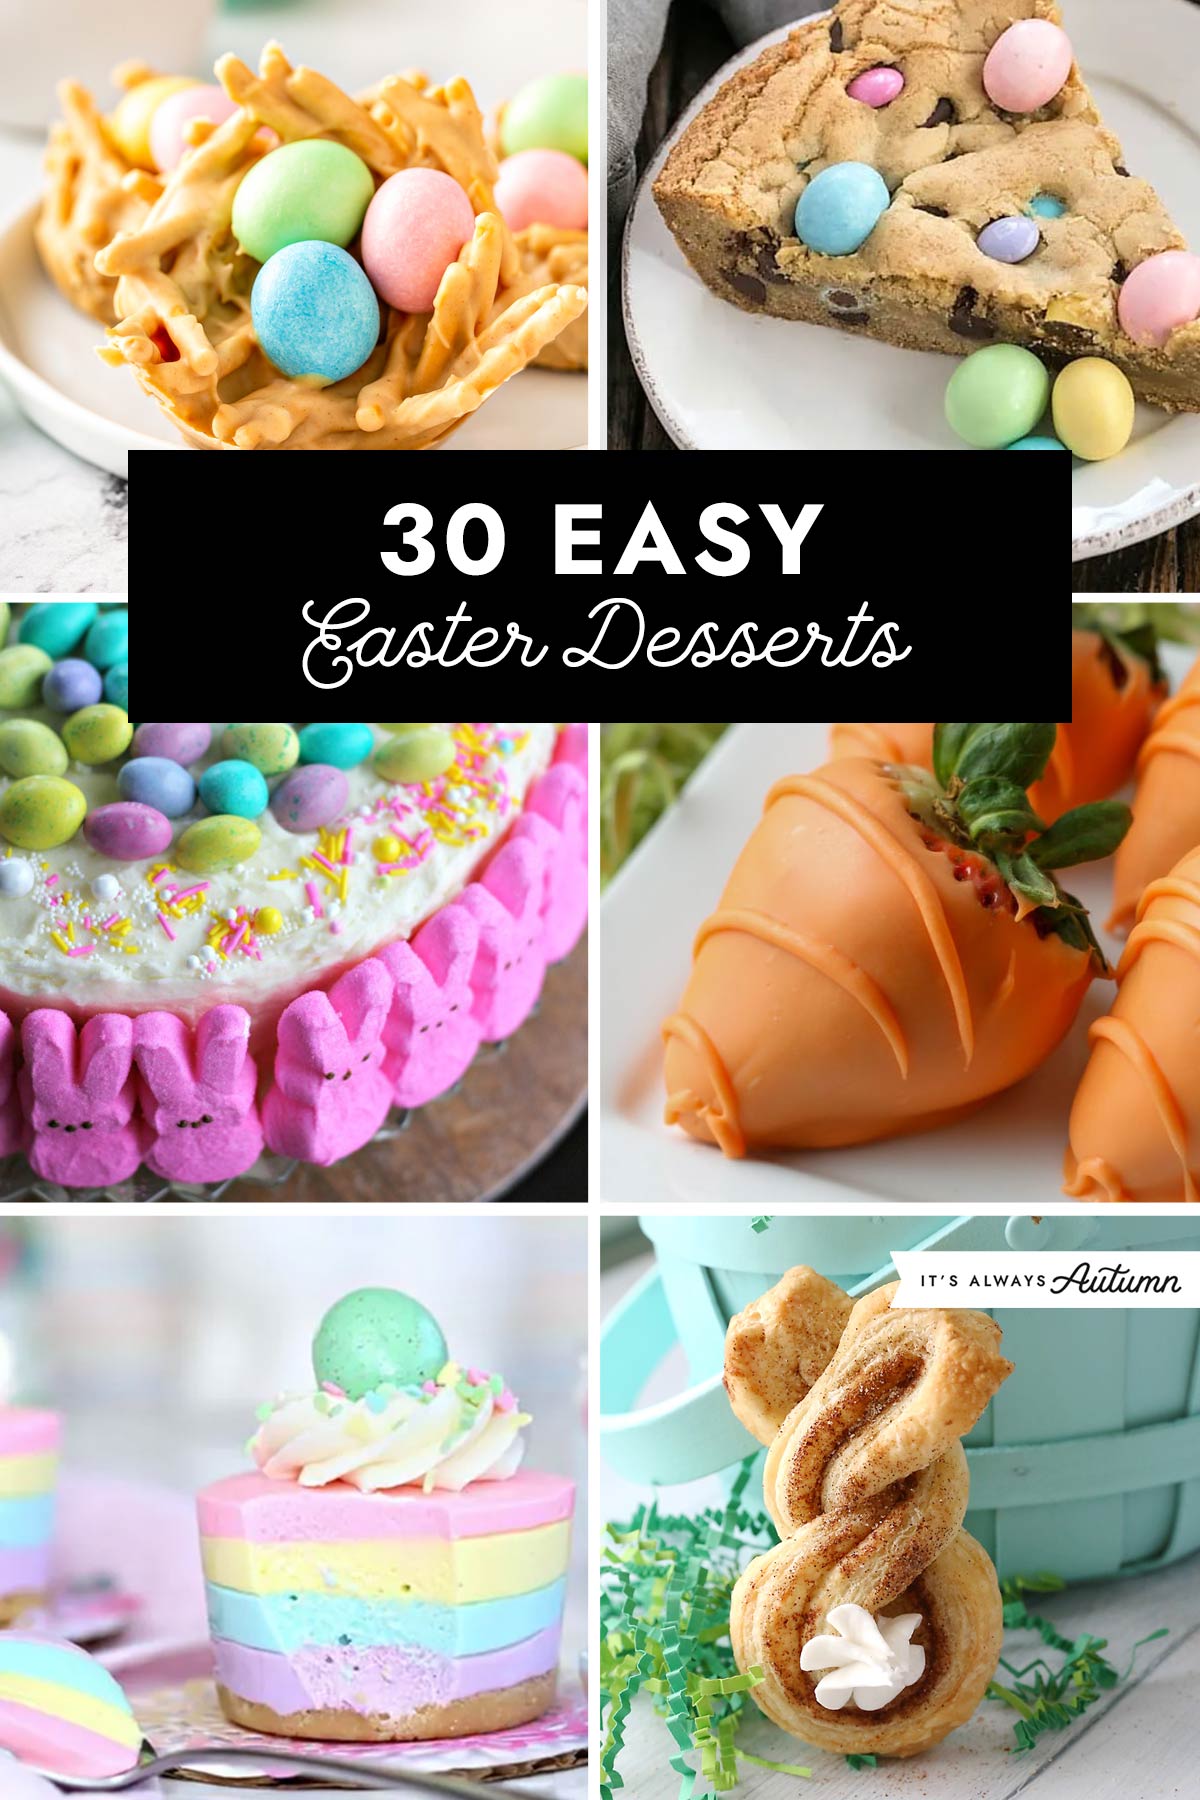 30 easy Easter desserts.